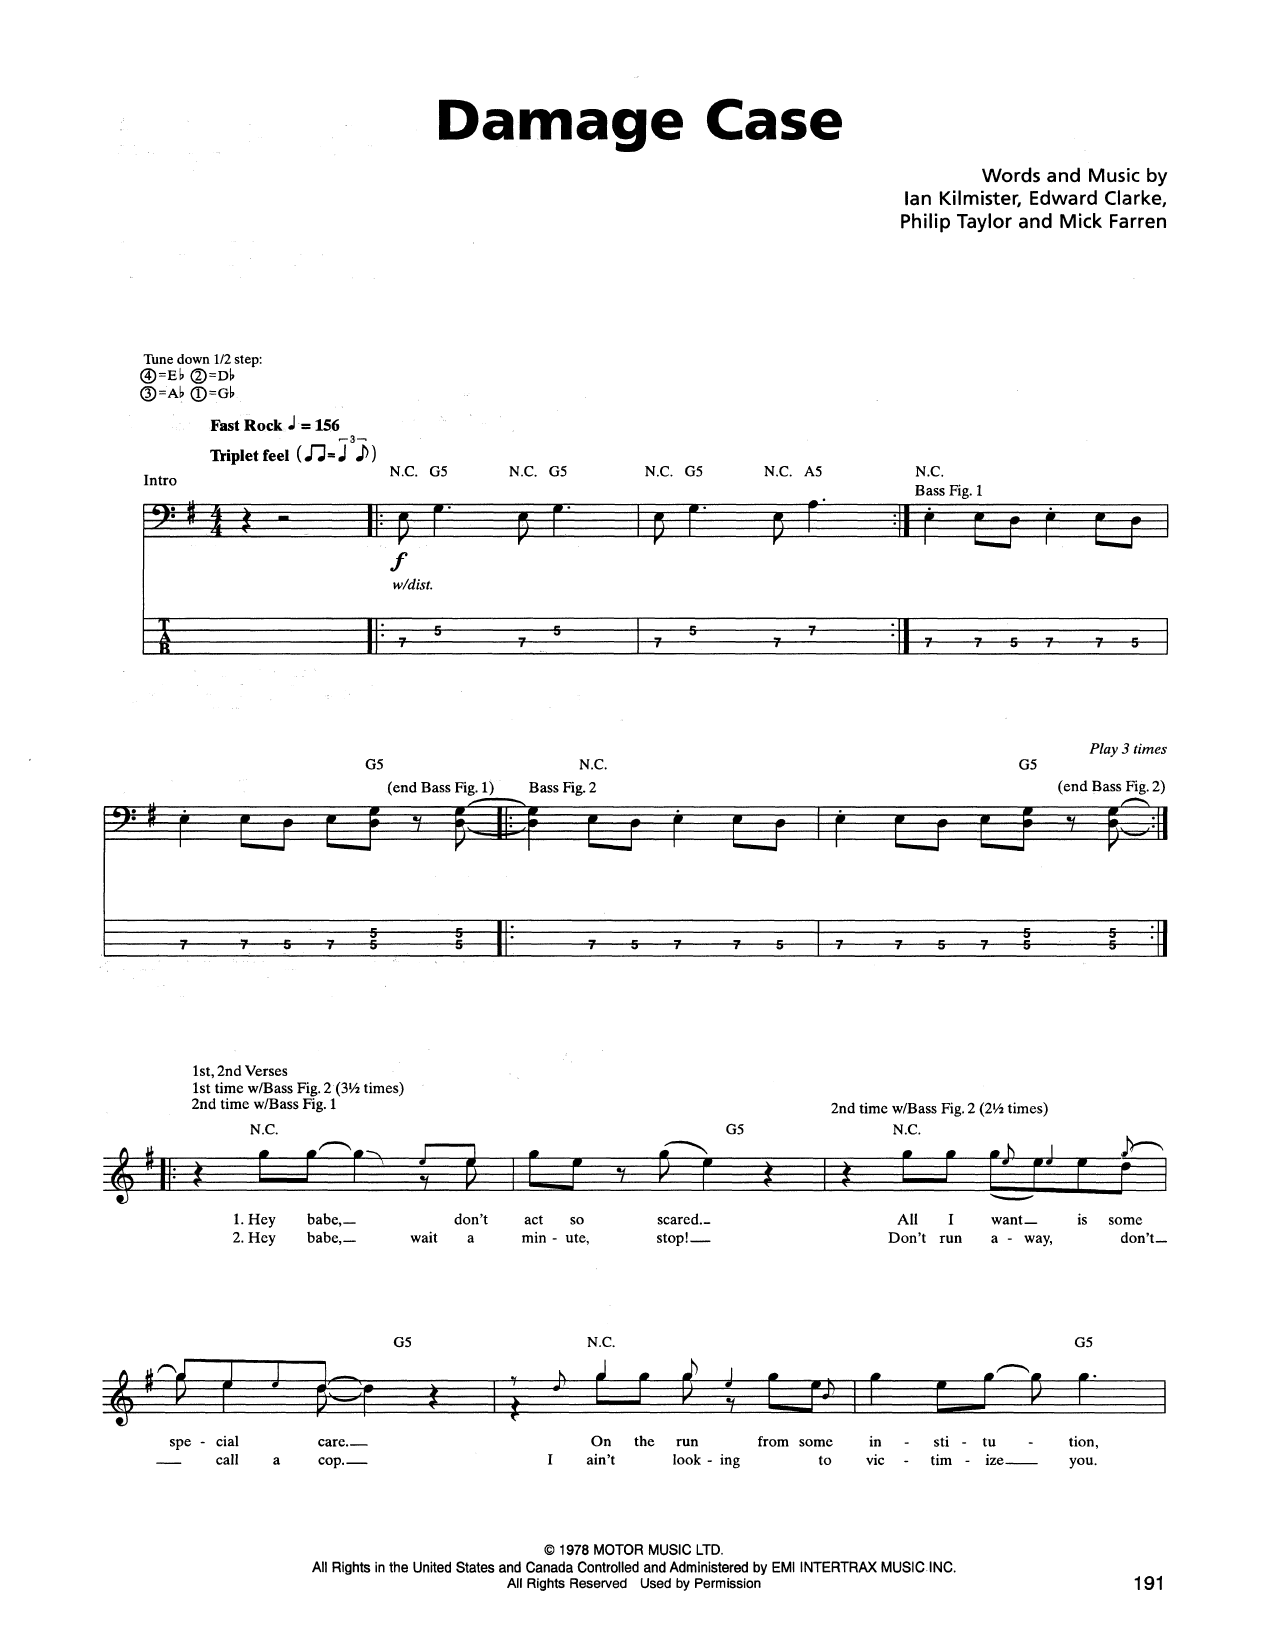 Metallica Damage Case Sheet Music Notes & Chords for Bass Guitar Tab - Download or Print PDF